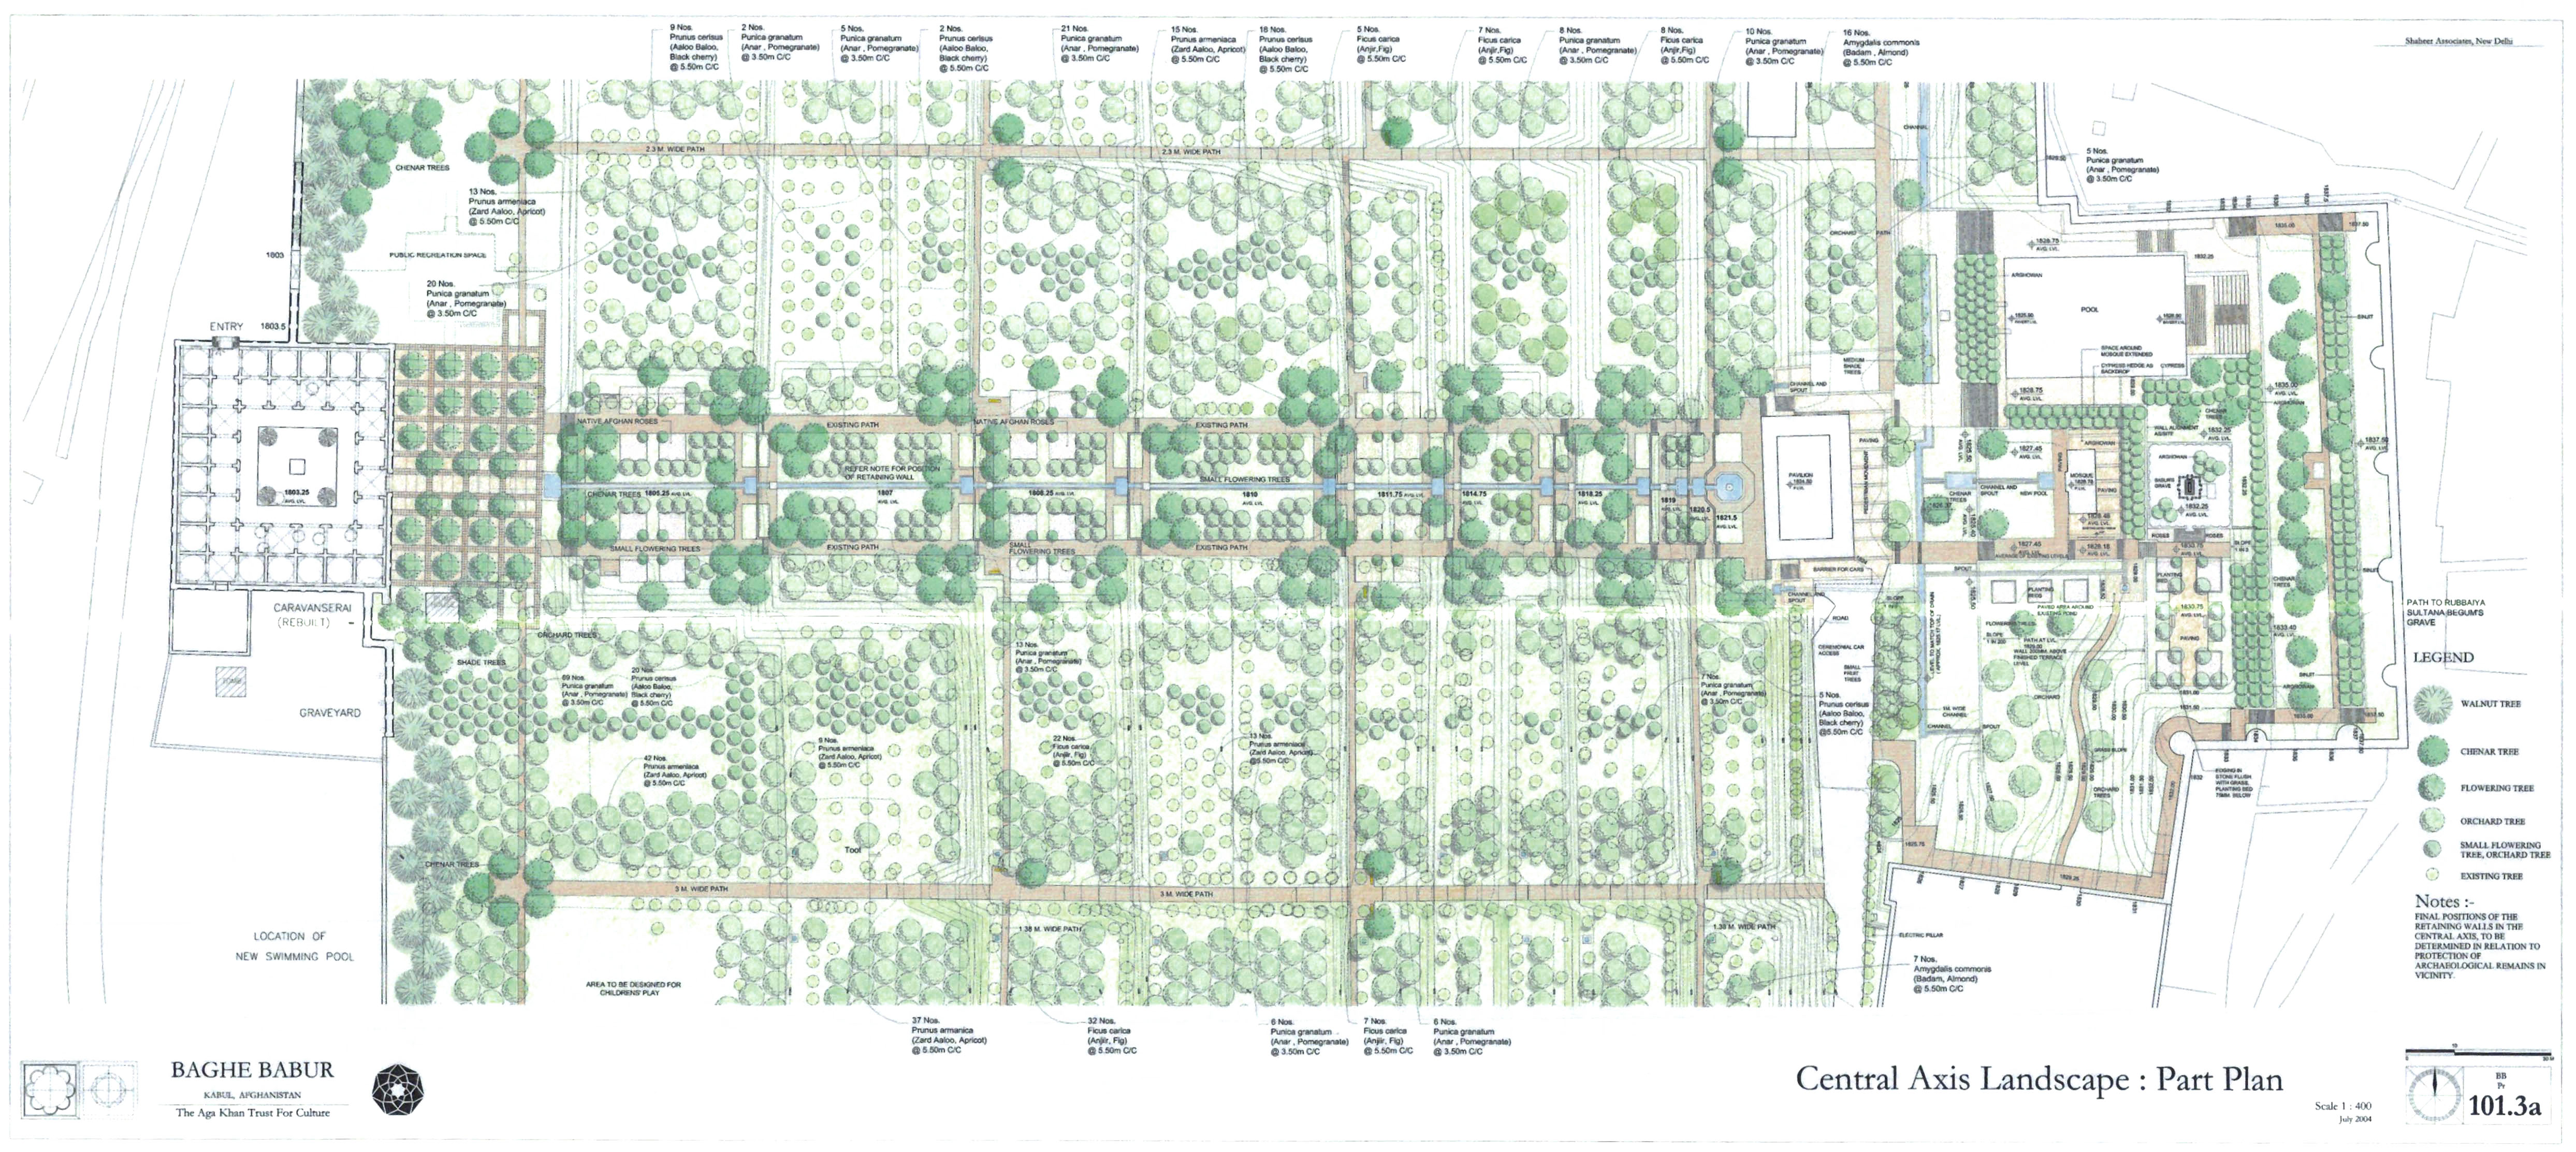 Bagh-e Babur Restoration: Gardens - Partial site plan by Shaheer Associates (New Delhi), showing proposed landscape scheme